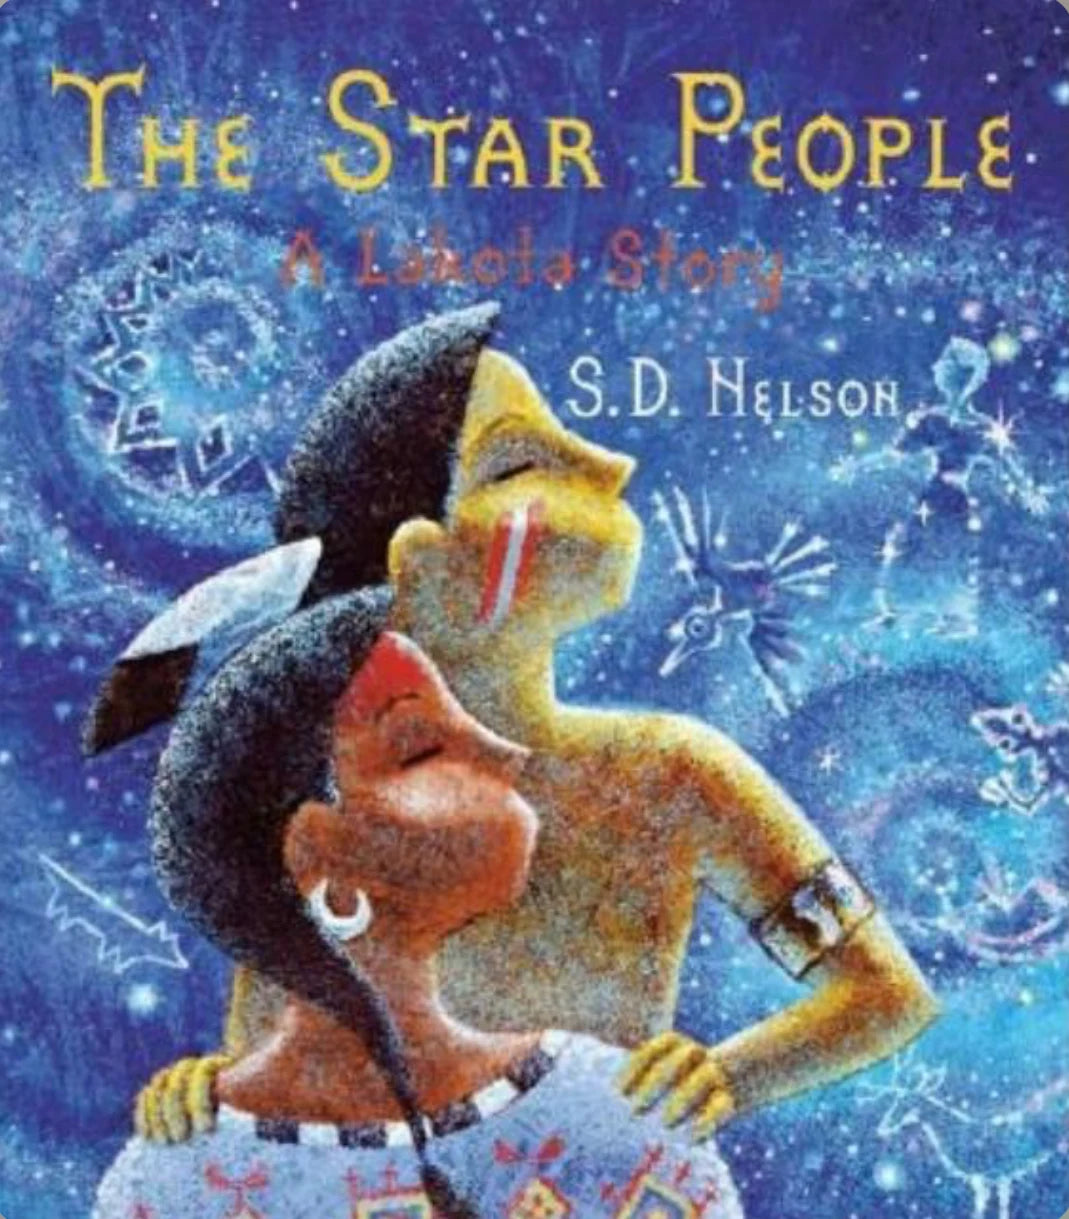 The Star People: A Lakota Story S.D. Nelson